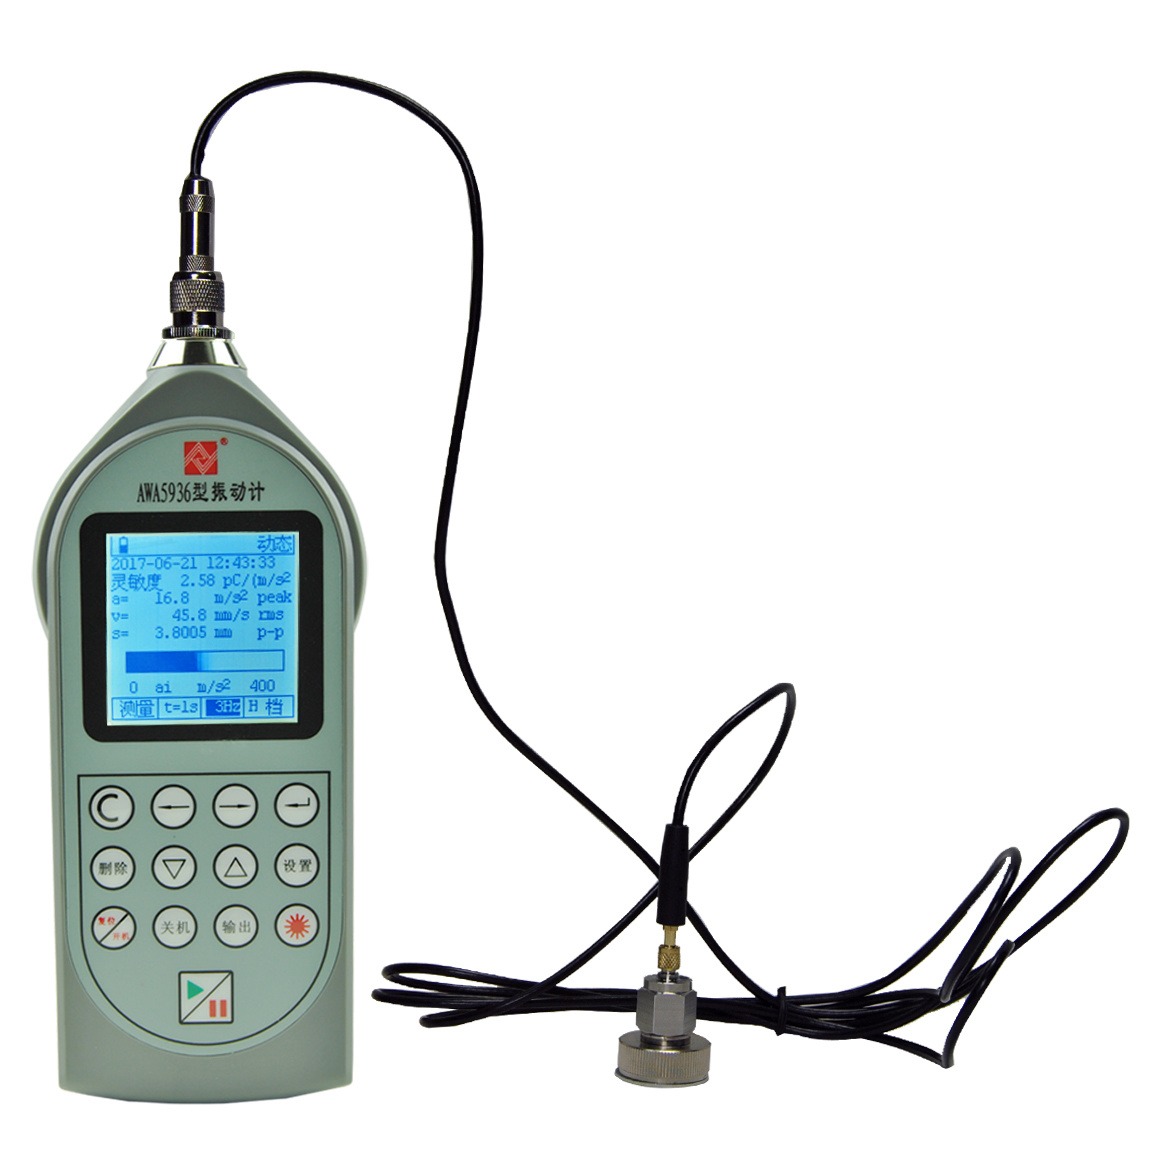 AWA5936-3手传振动测量仪 测定仪机器和手传振动检测仪